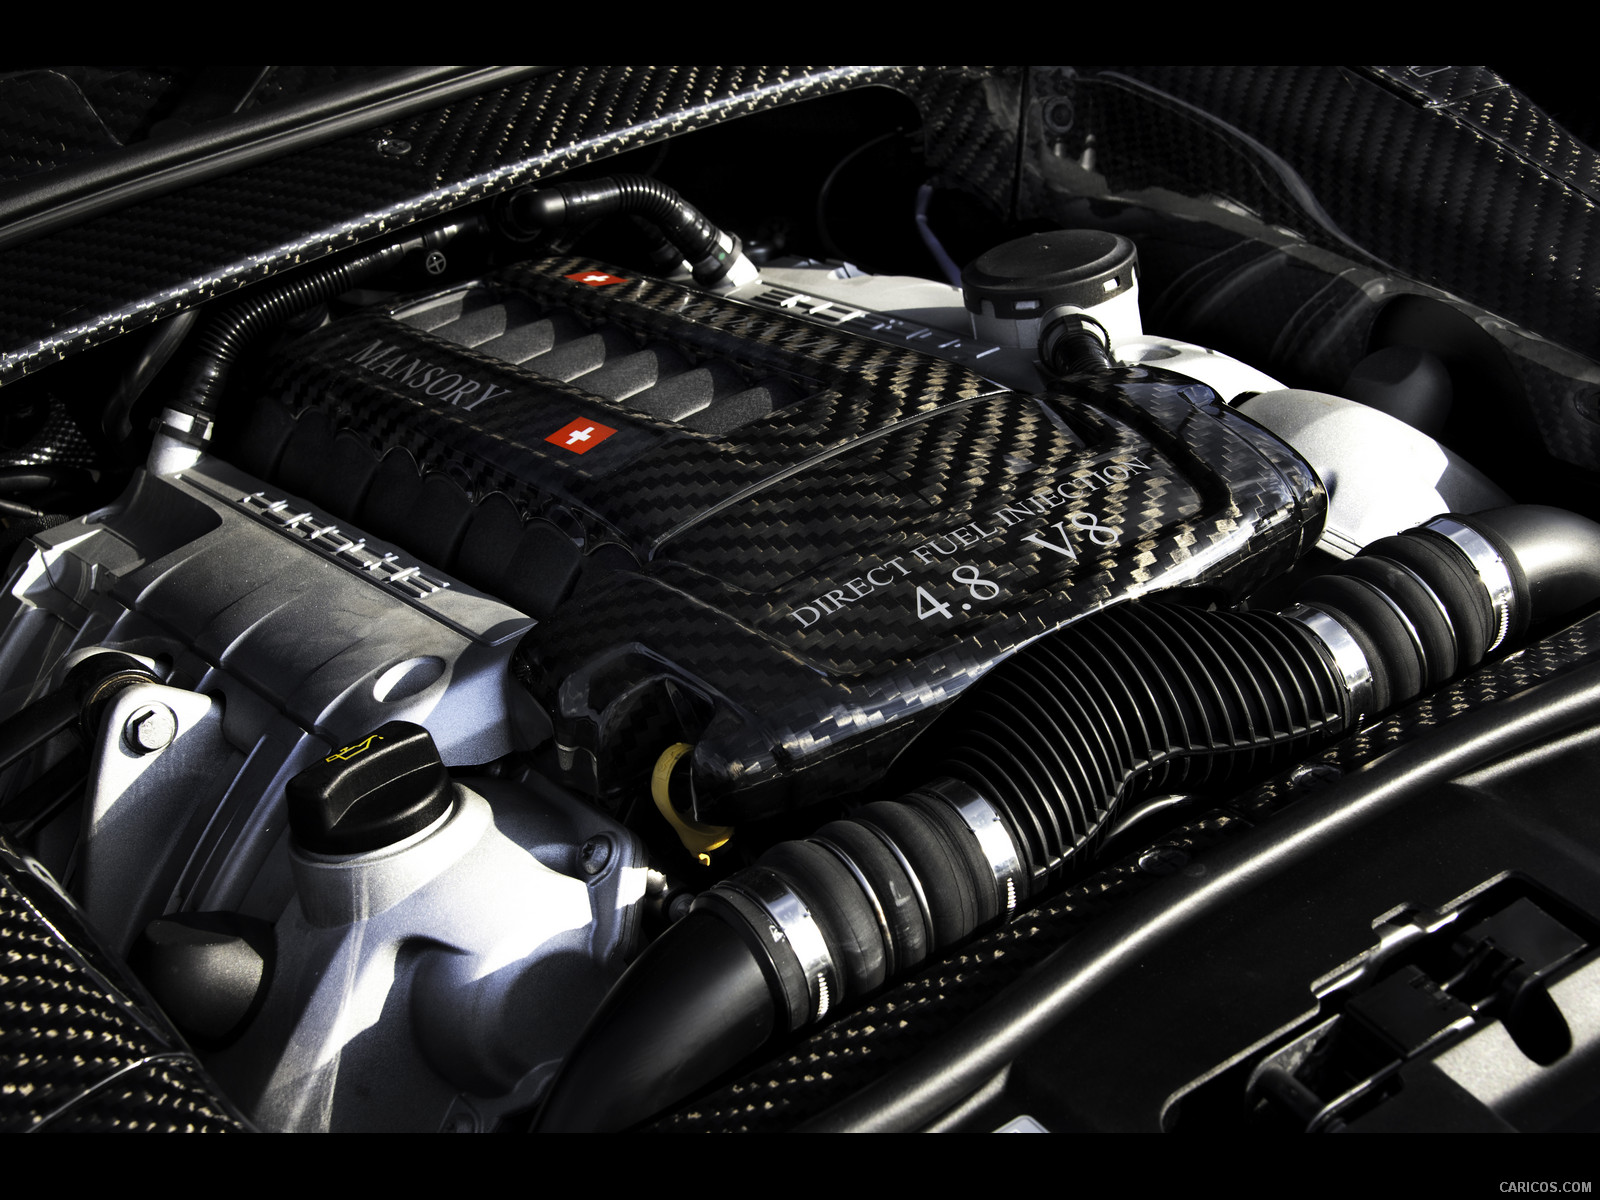 2009 Mansory Chopster based on Porsche Cayenne Turbo S  - Engine, #38 of 38